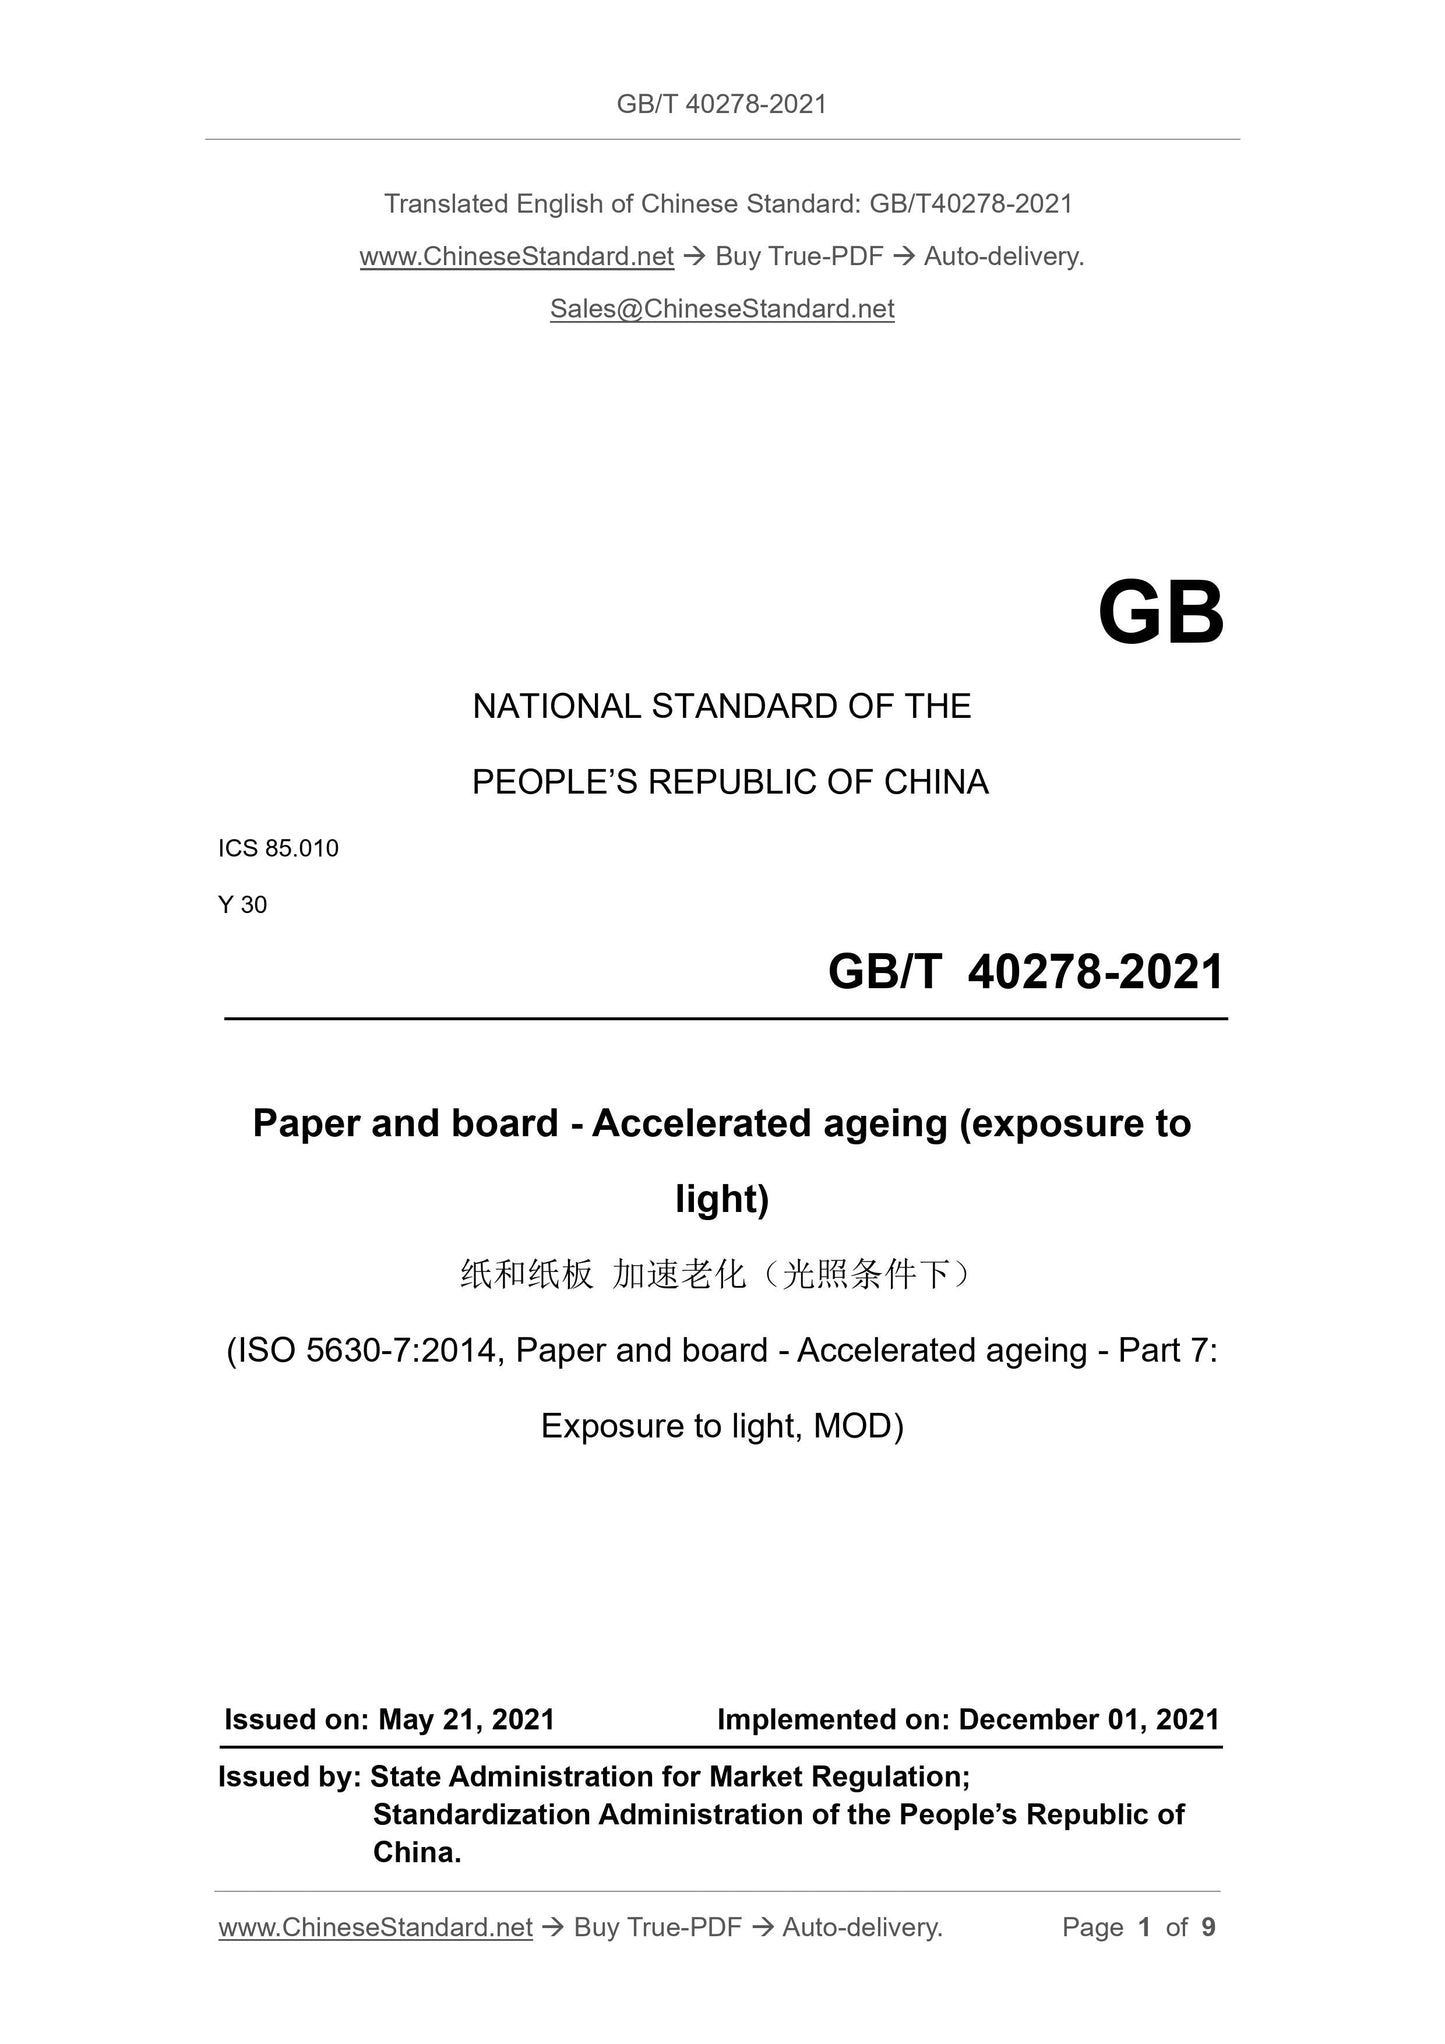 GBT40278-2021 Page 1